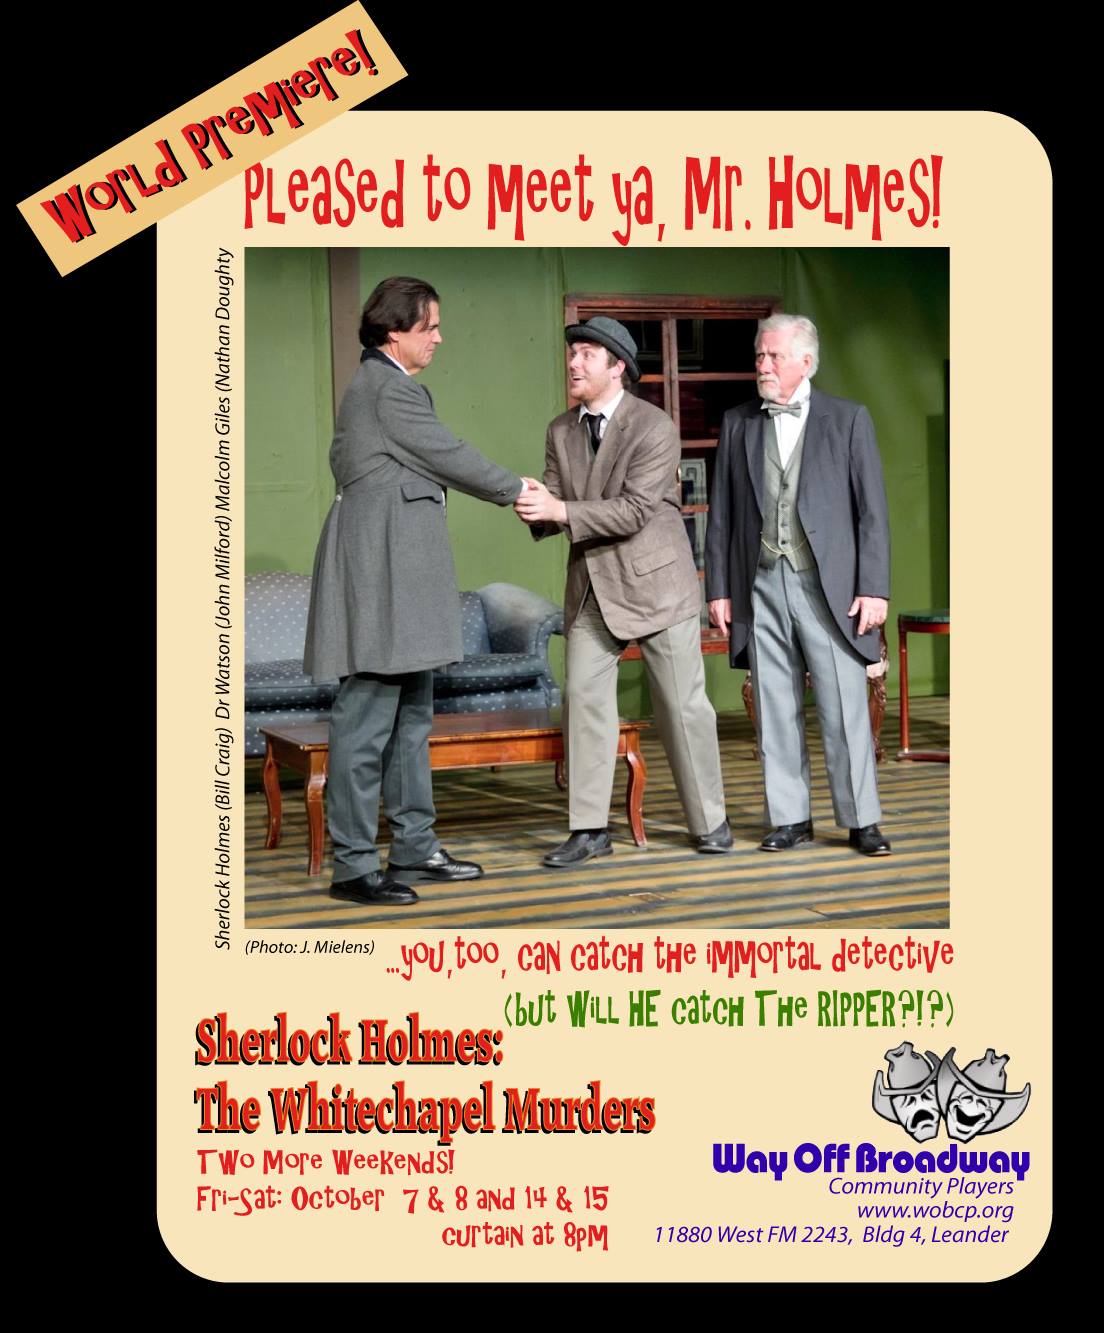 Sherlock Holmes: The Whitechapel Murders by Way Off Broadway Community Players